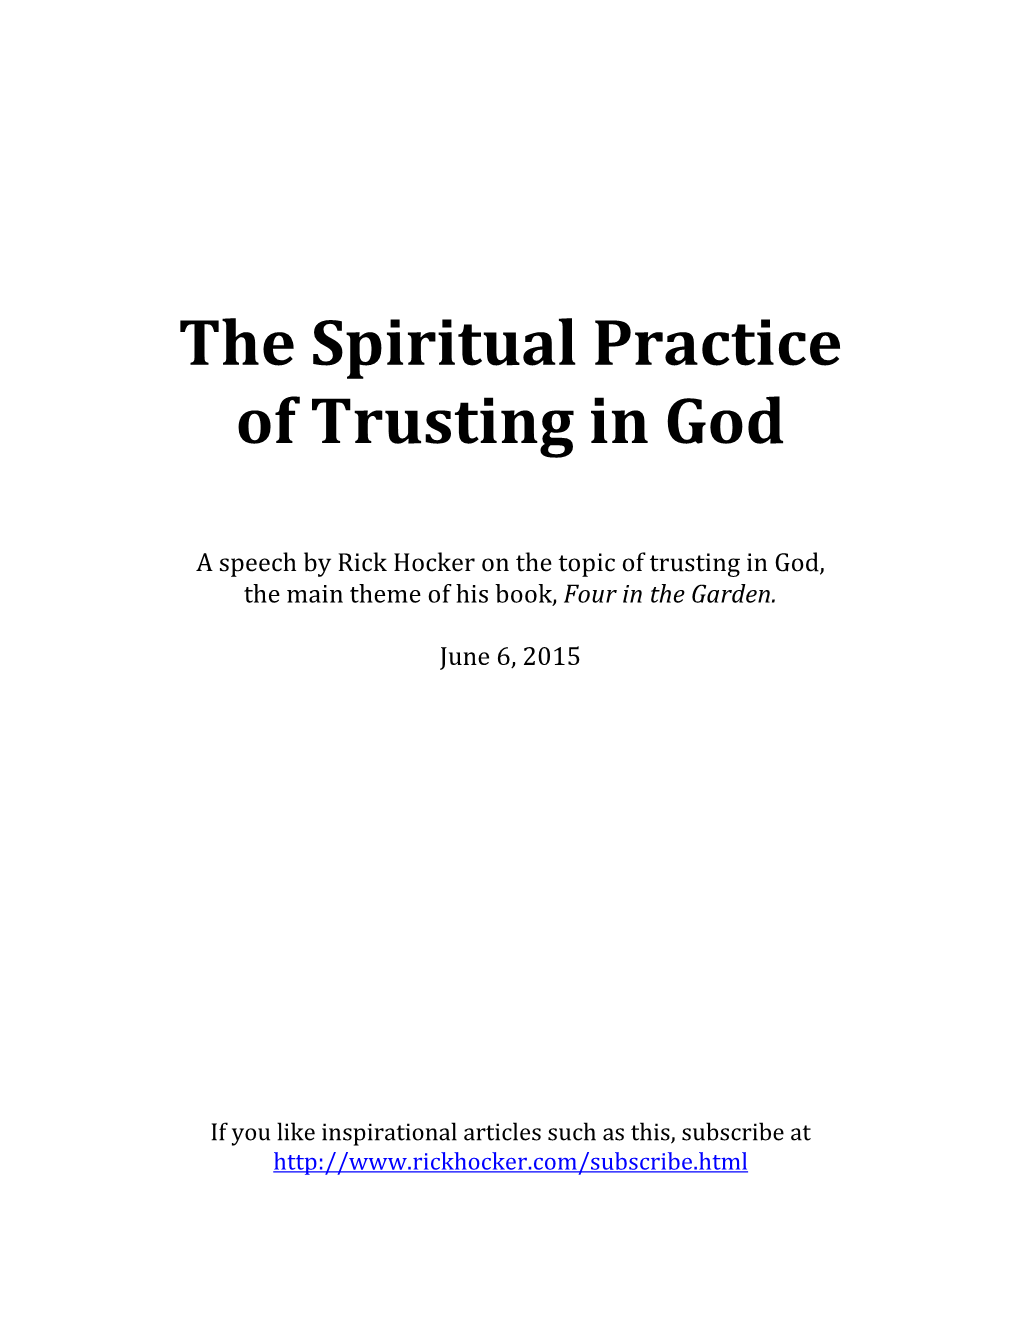 The Spiritual Practice of Trusting in God